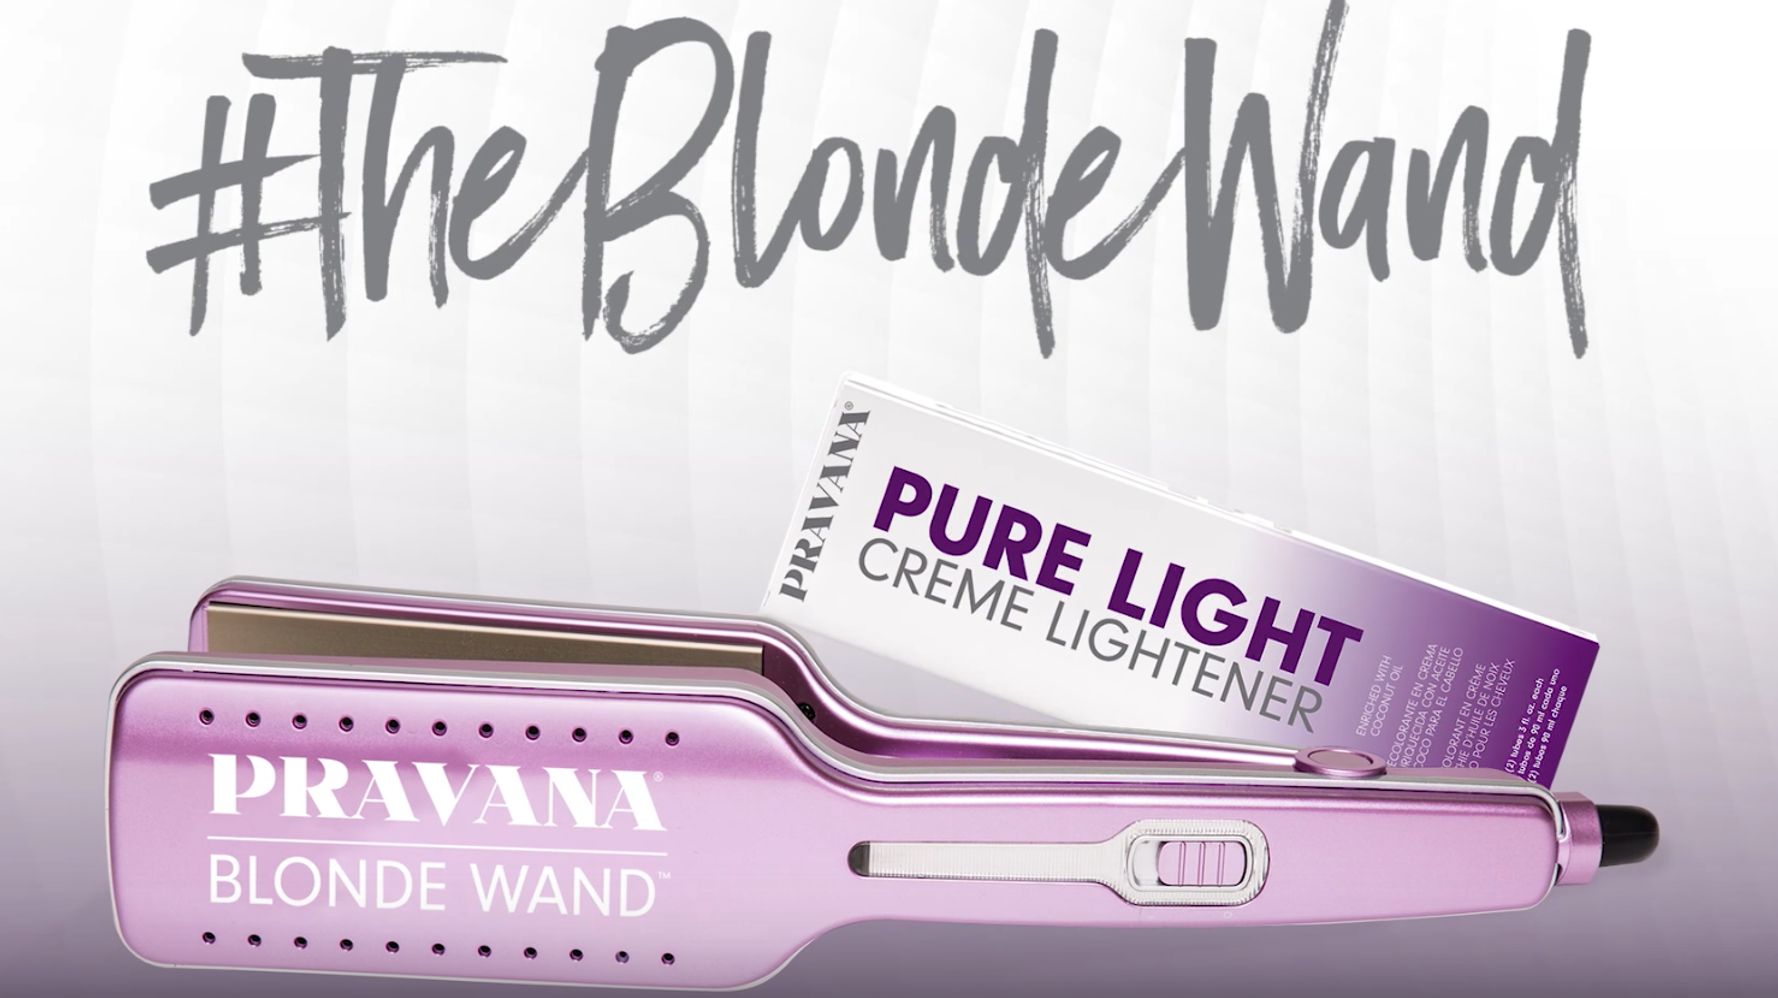 Pravana The Blonde Wand Flat Iron + Pure Light Creme Lightener